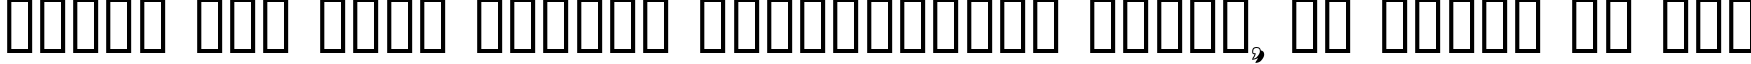 Пример написания шрифтом Dumbledor 3 Shadow текста на русском